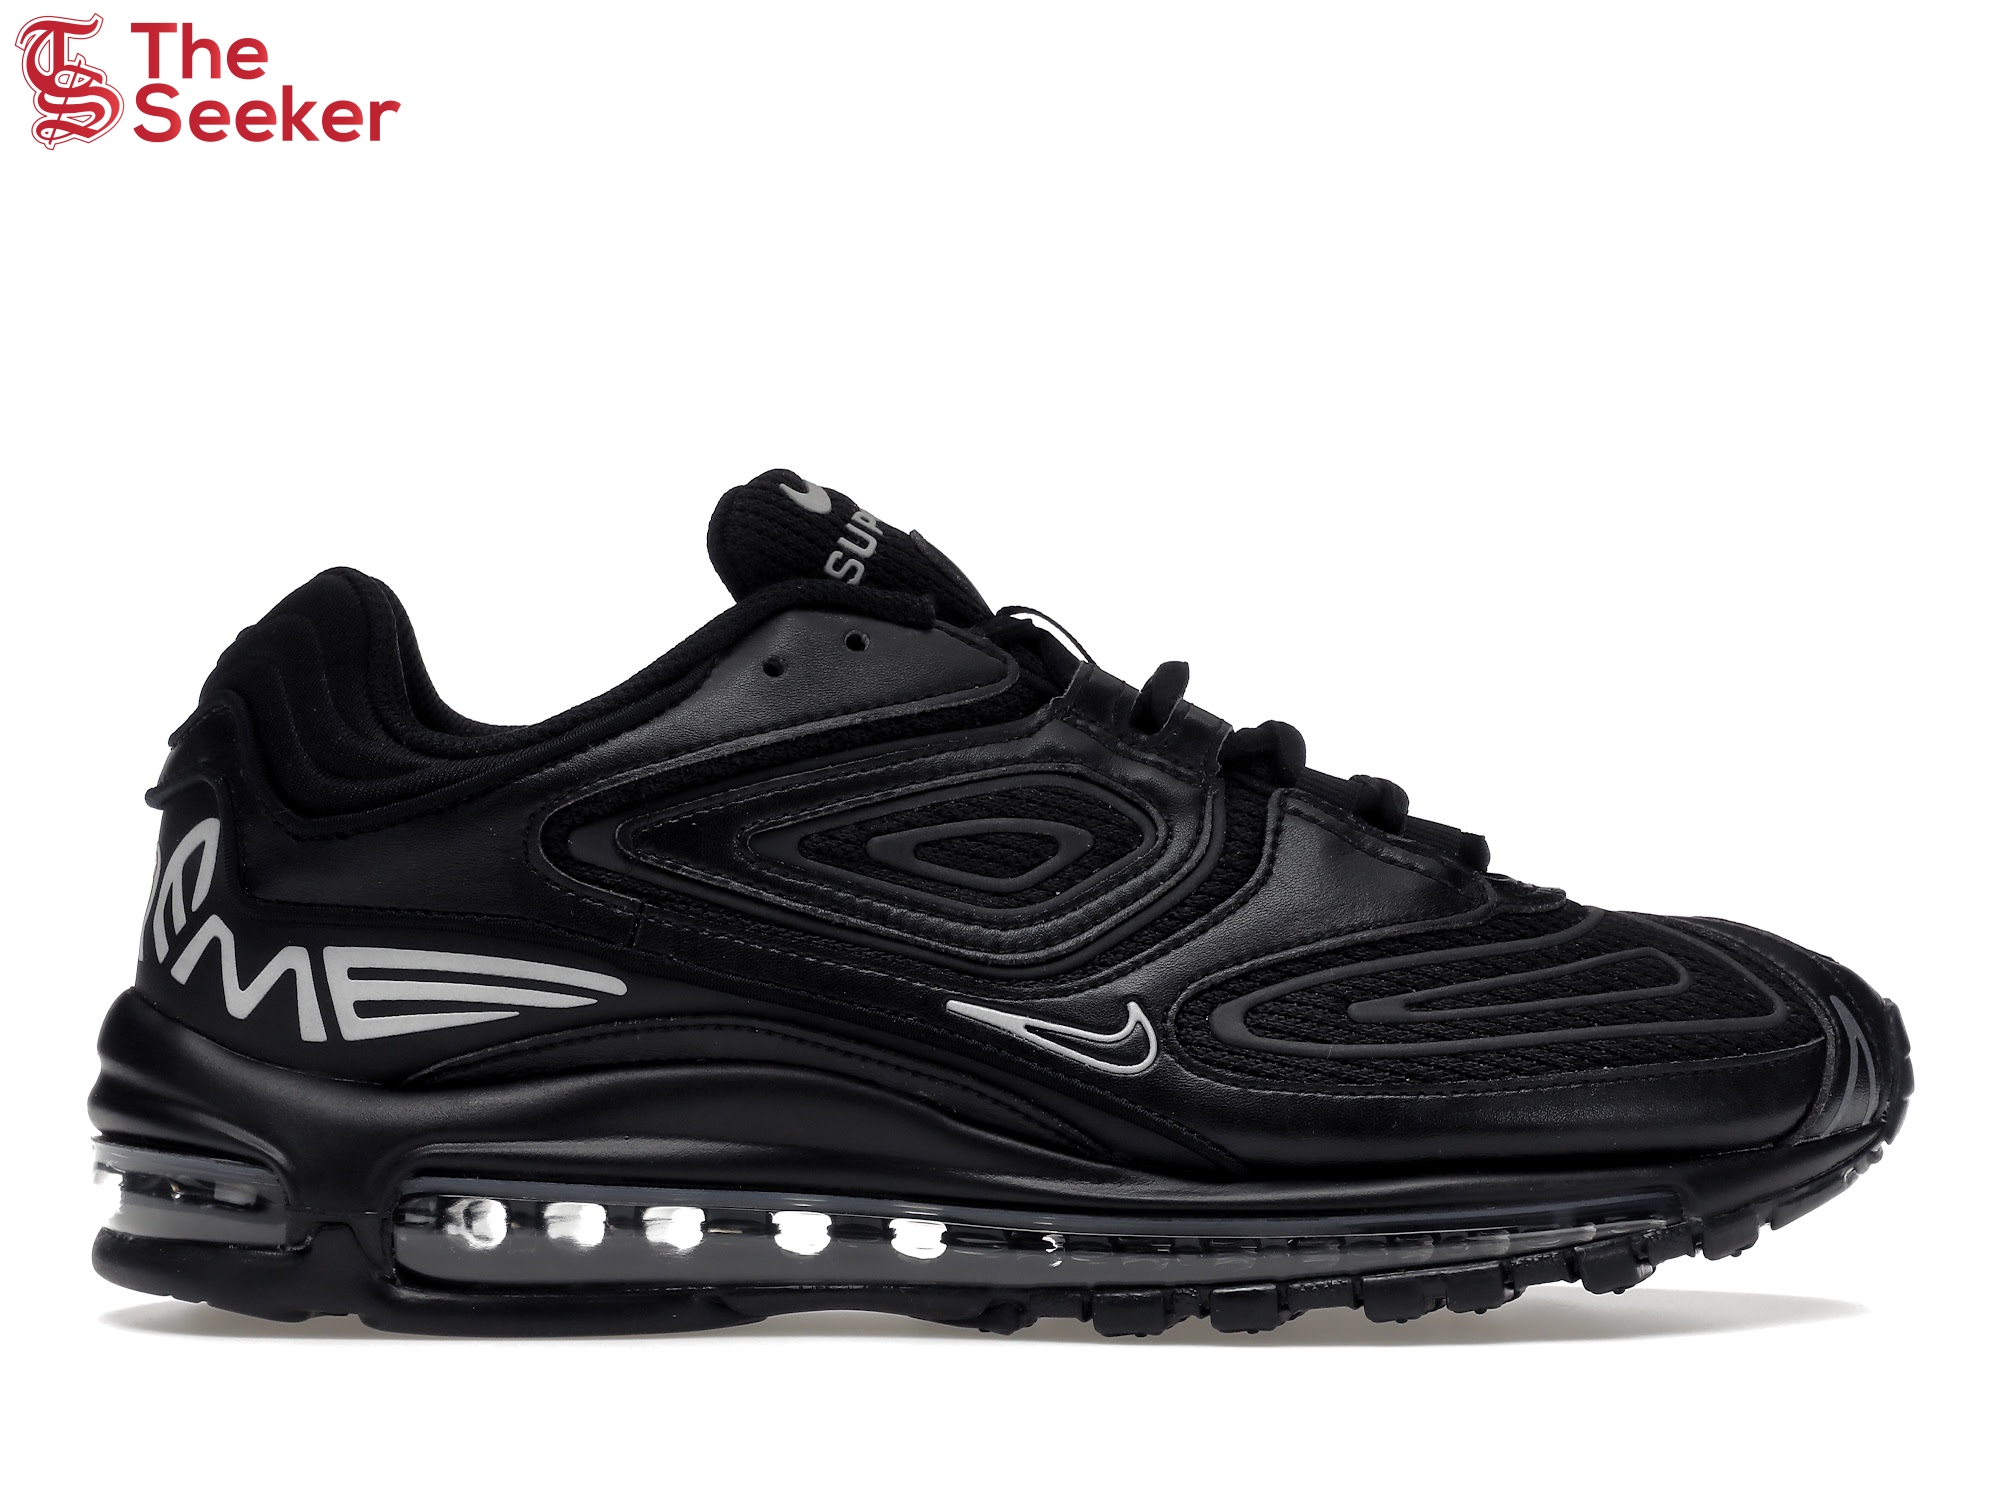 Nike Air Max 98 TL Supreme Black